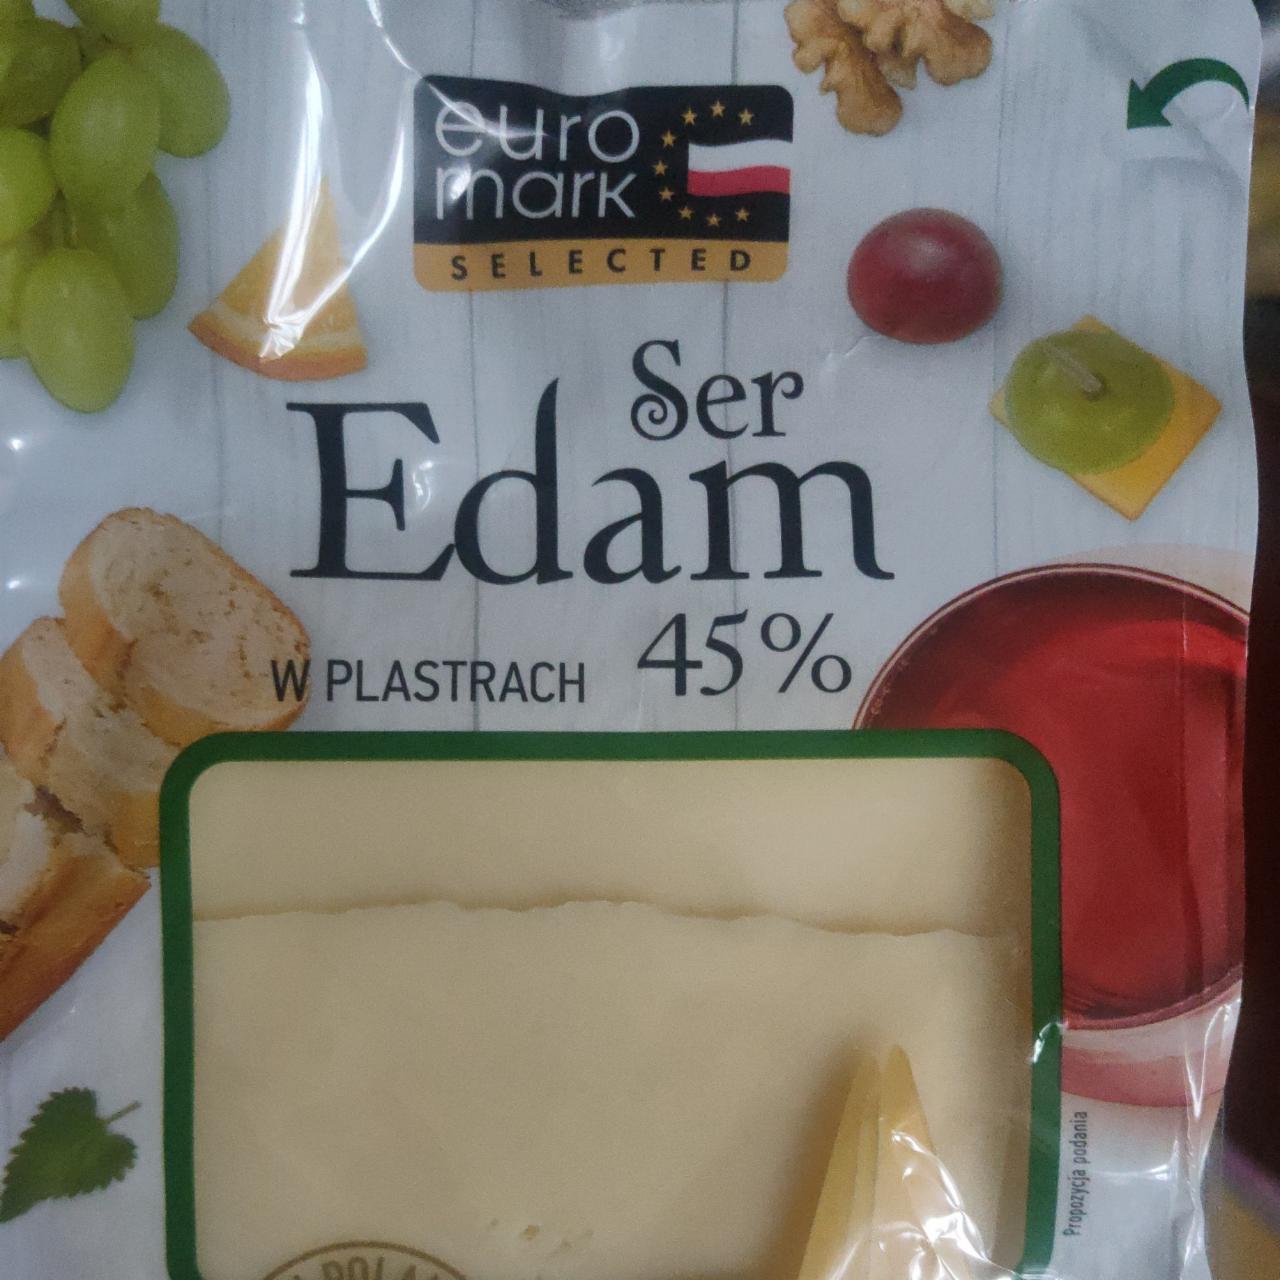 Фото - Сыр полутвердый Эдам 45% Euromark